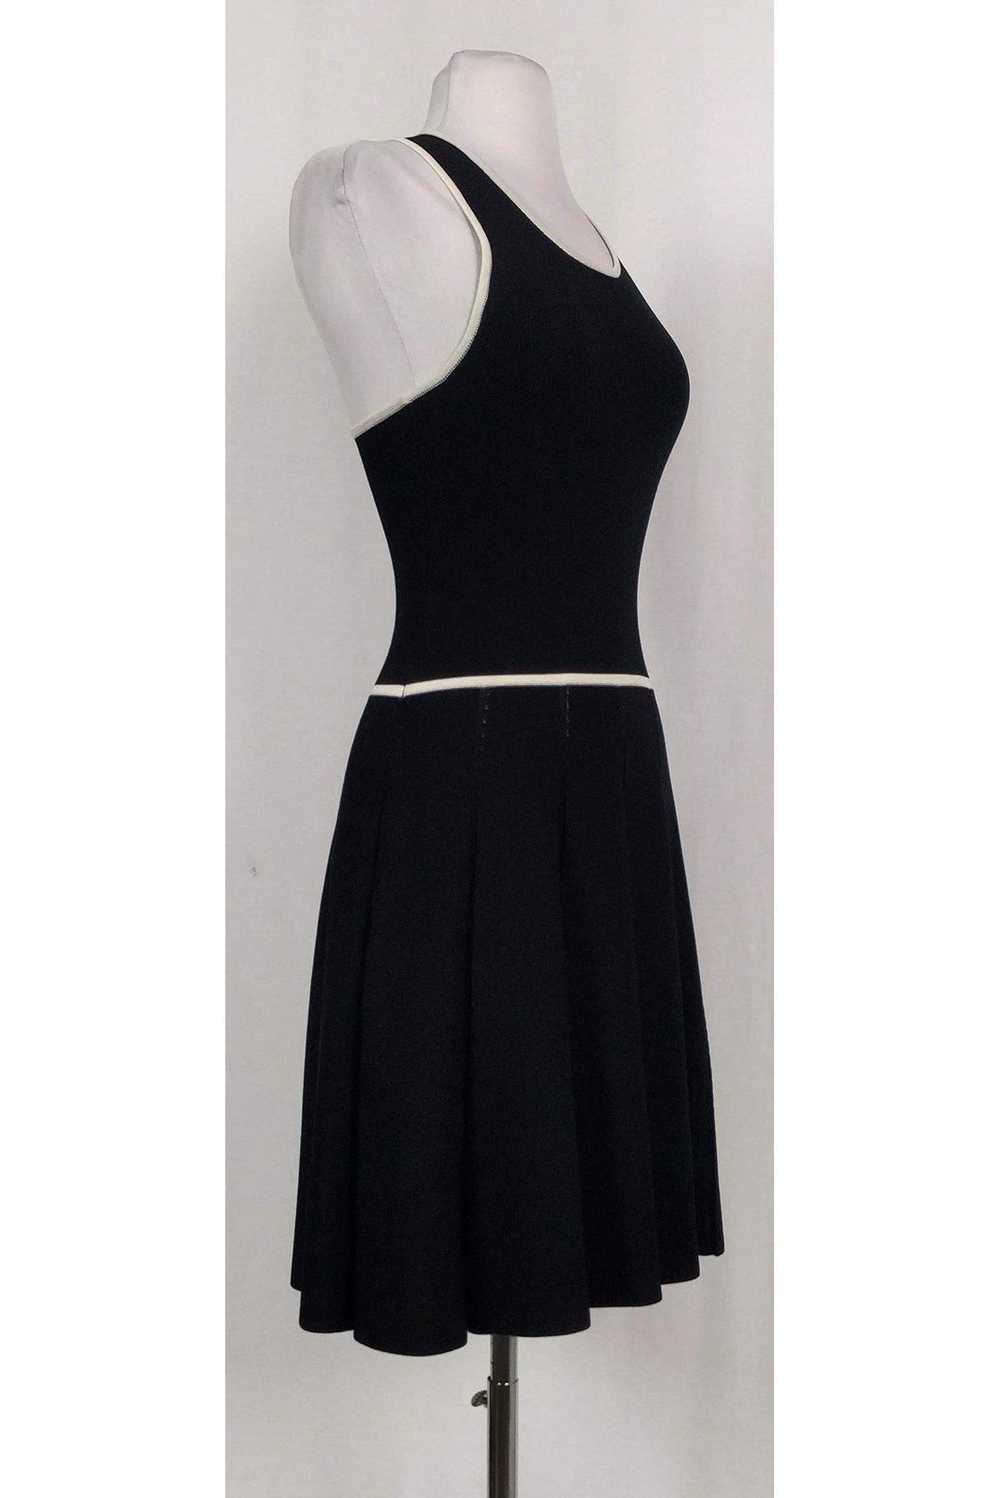 Parker - Black & White Trim Dress Sz XS - image 2